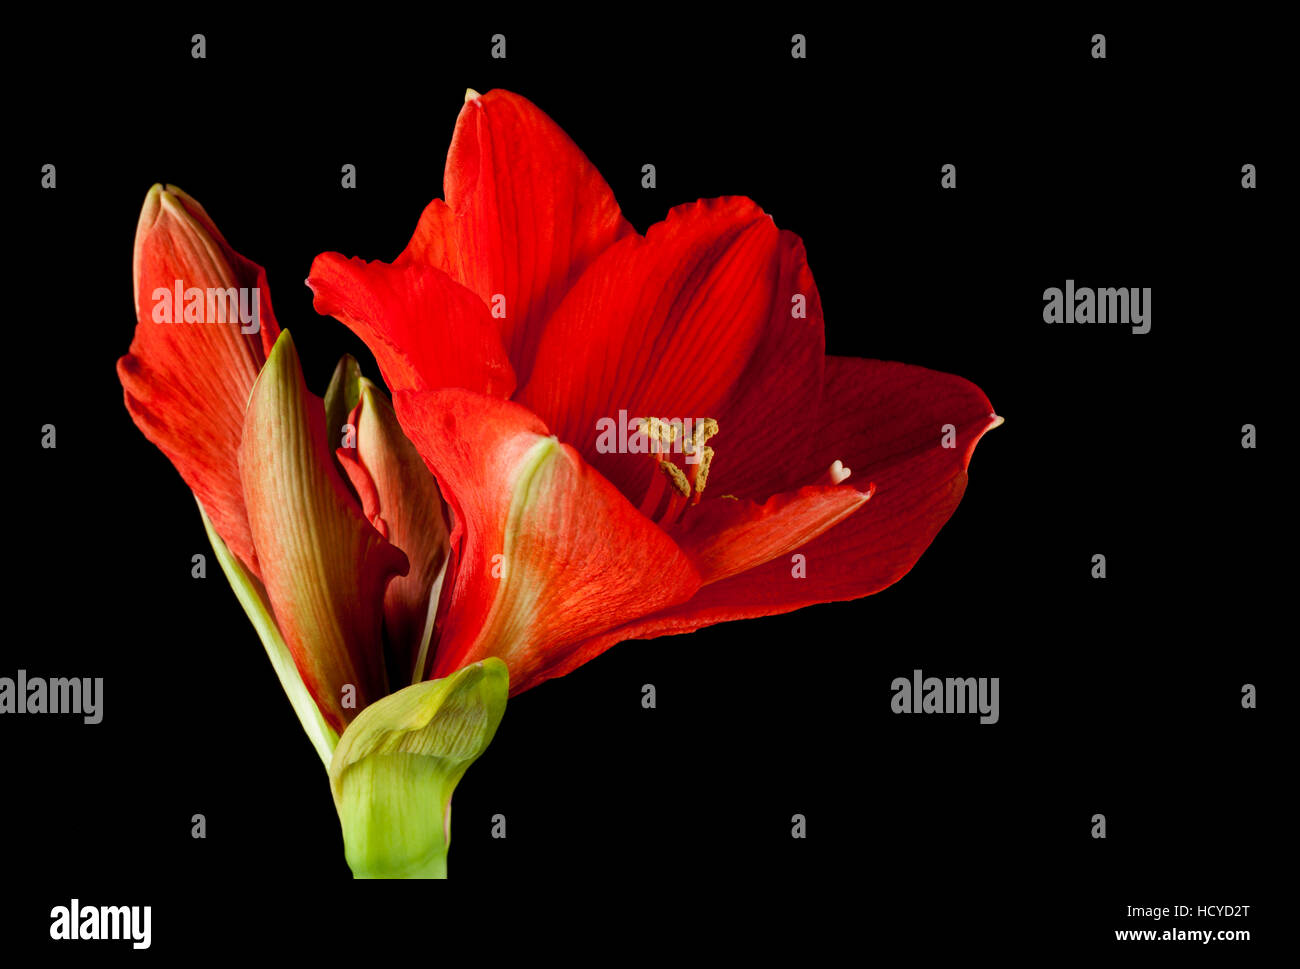 Red Amaryllis blossoms isolated on black background Stock Photo